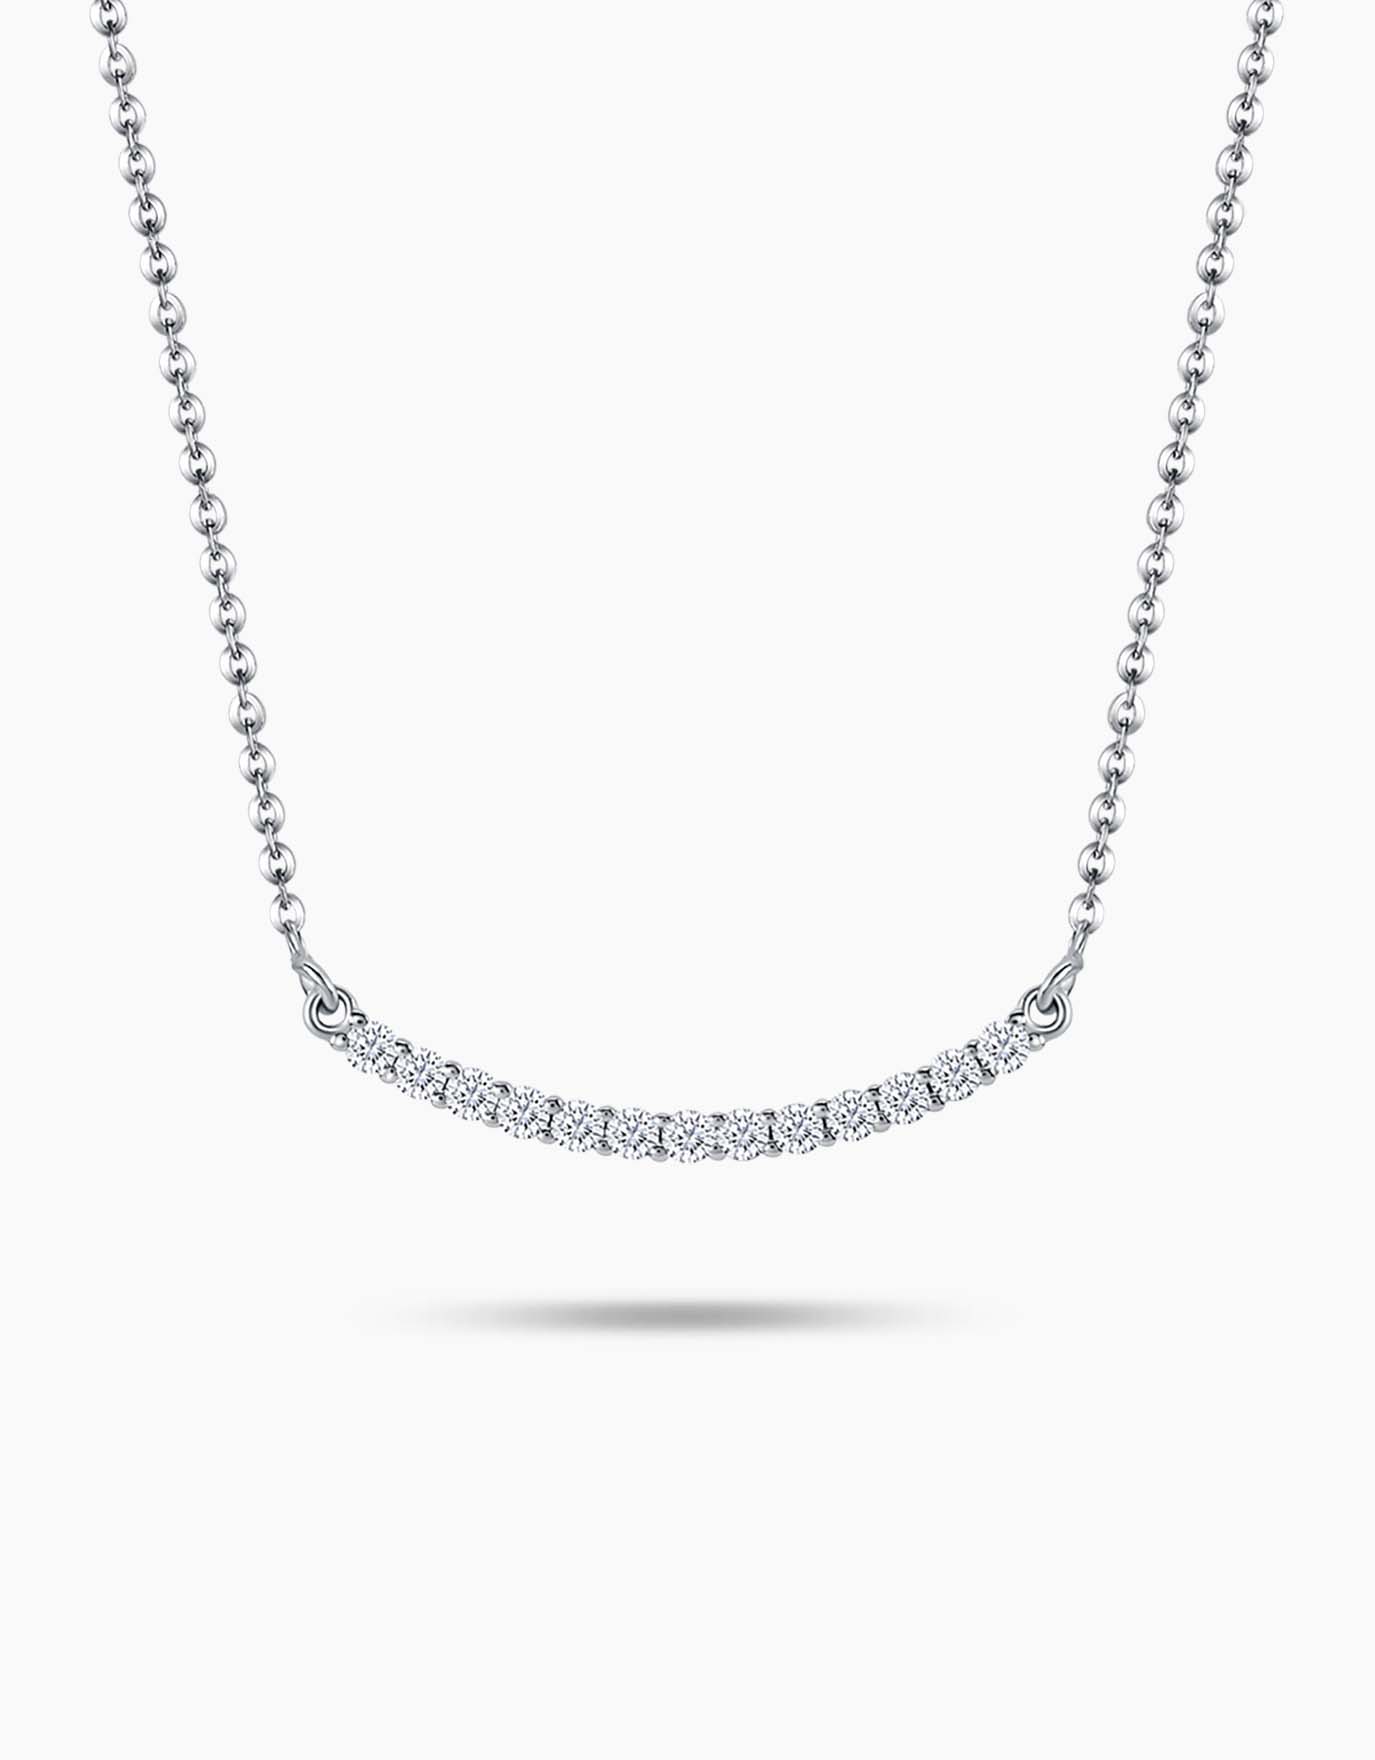 LVC Eterno Elegance Curved Diamond Necklace